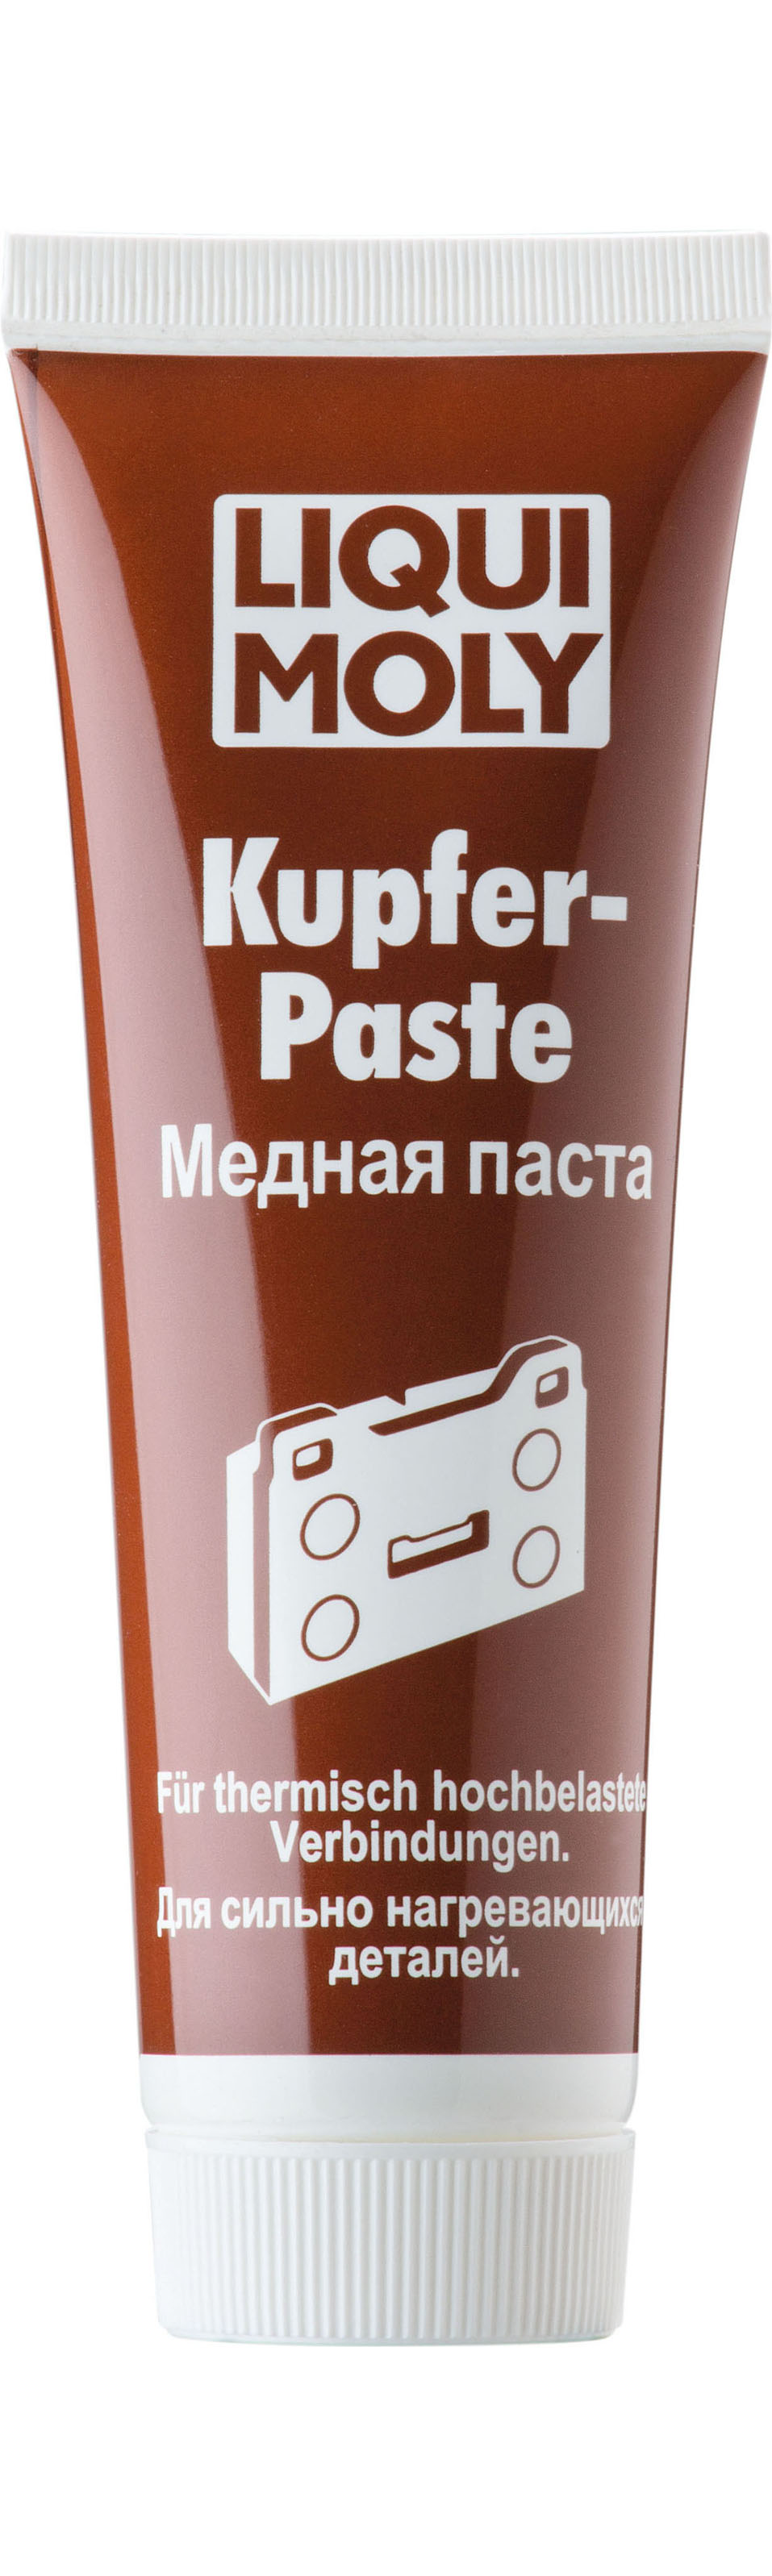 Медная паста Kupfer-Paste, 100мл - Liqui Moly 7579